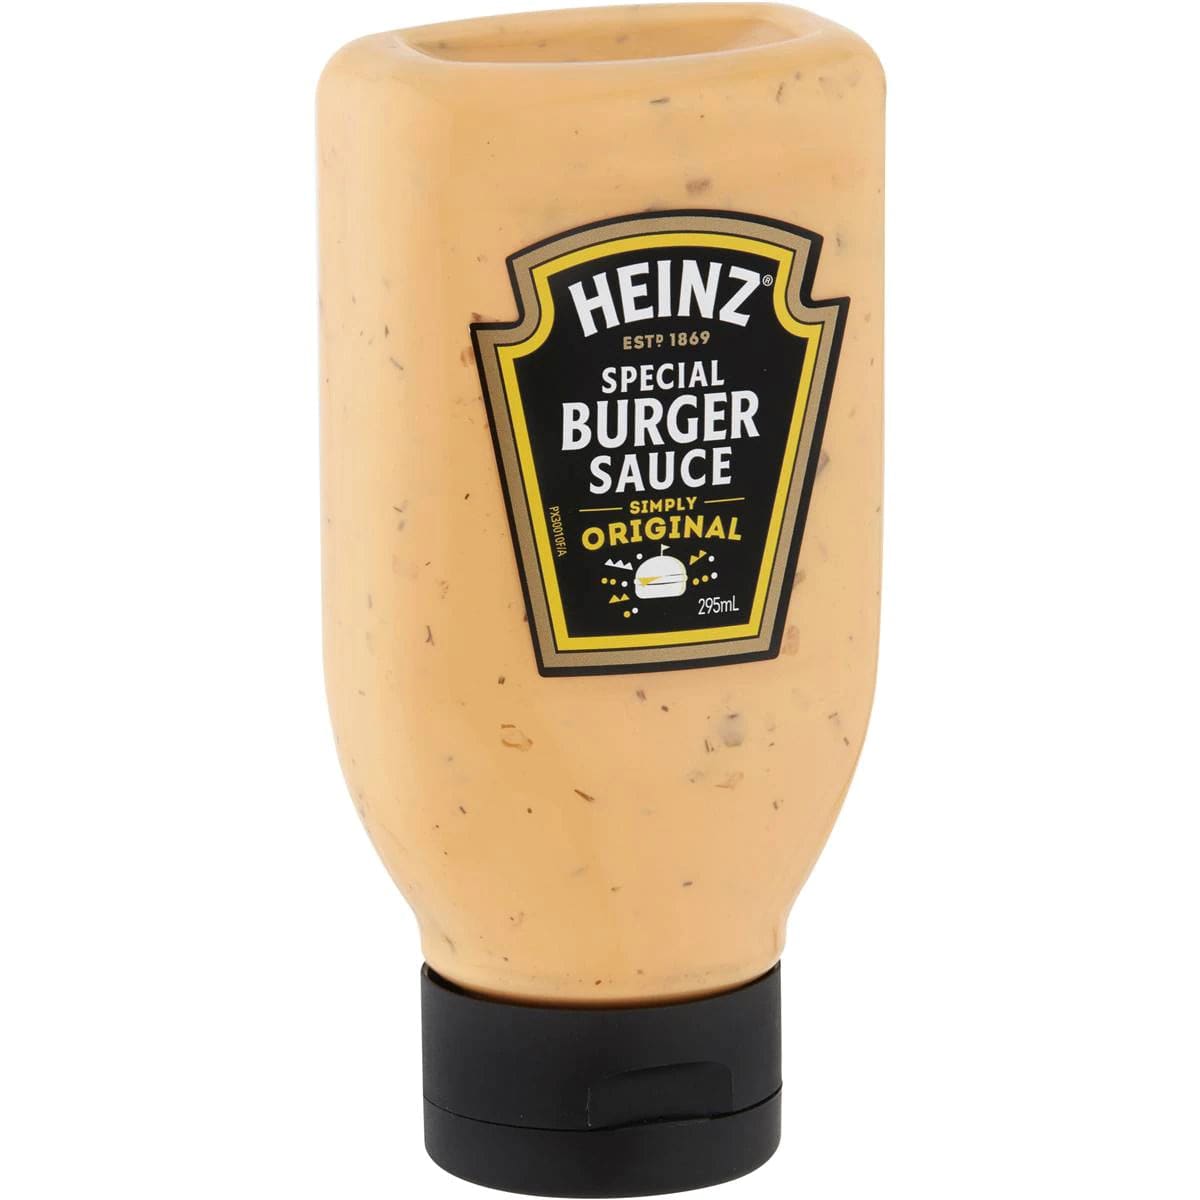 Heinz Special Burger Sauce 295ml